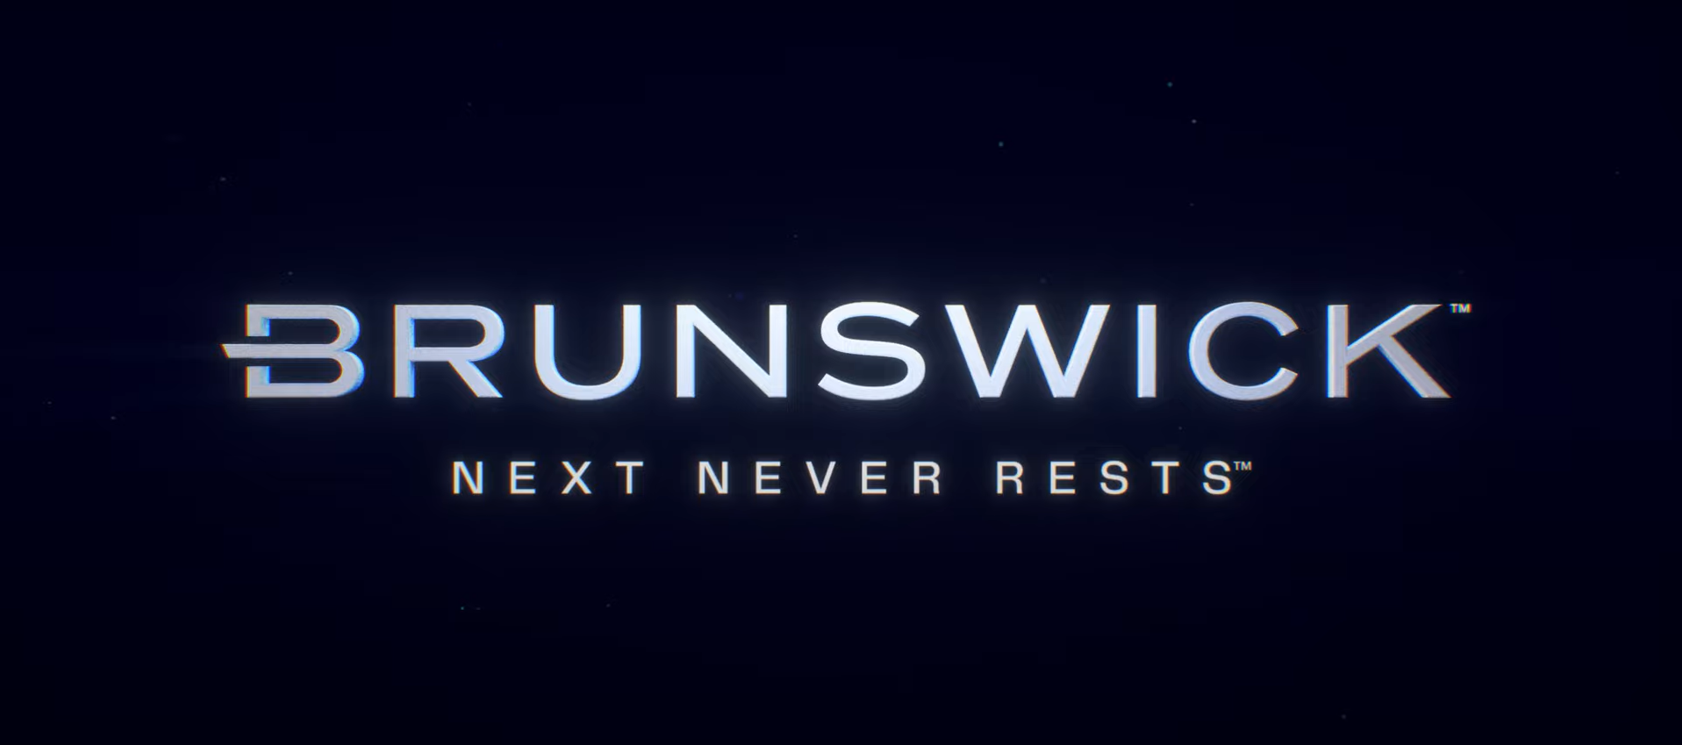 Brunswick announces brand update